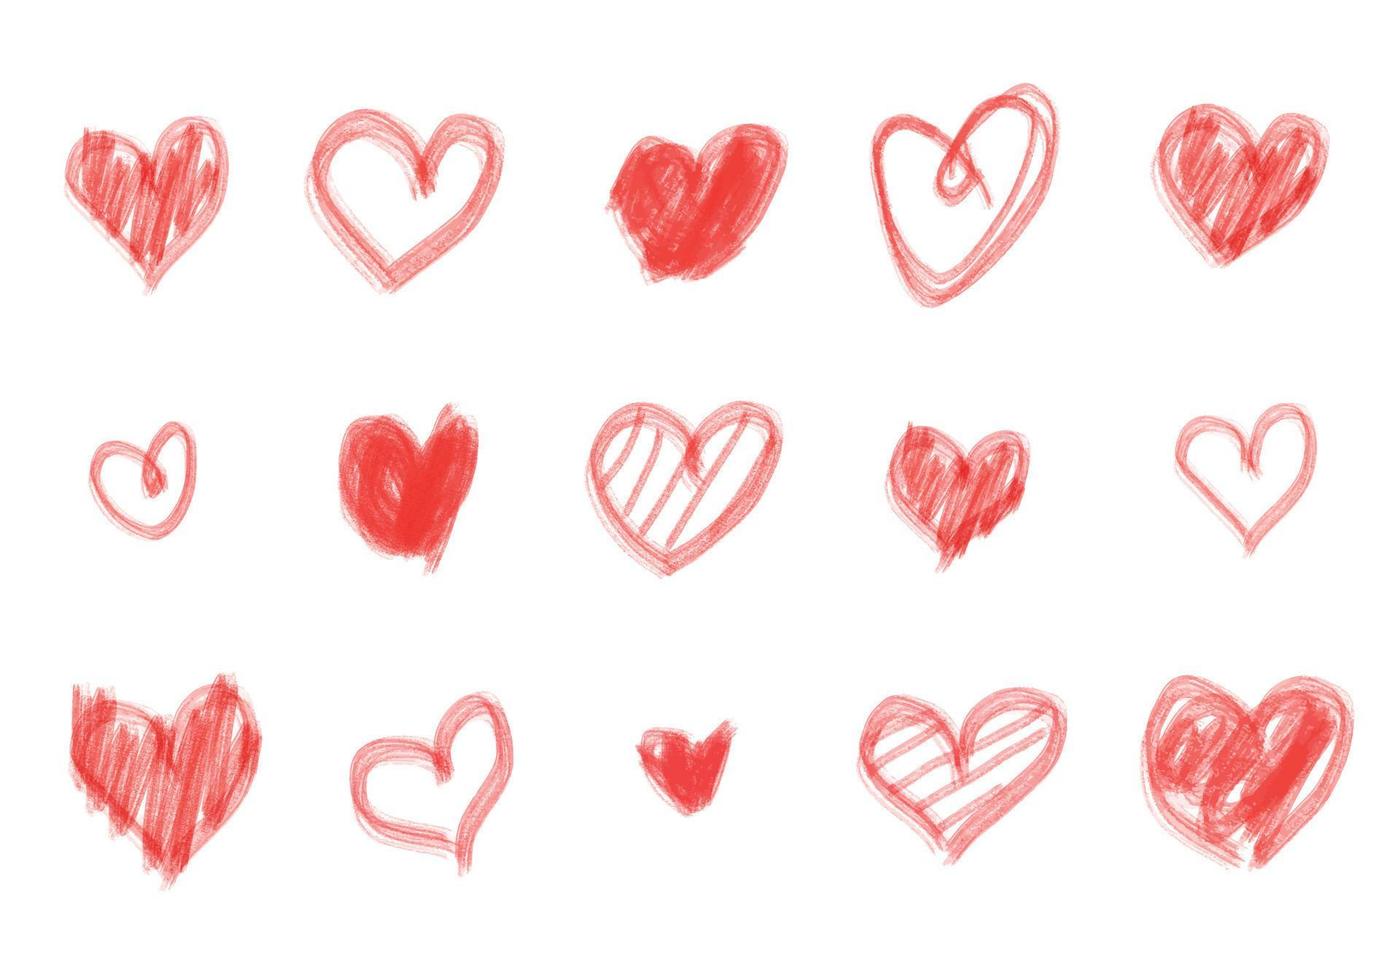 Hand drawn heart shapes vector